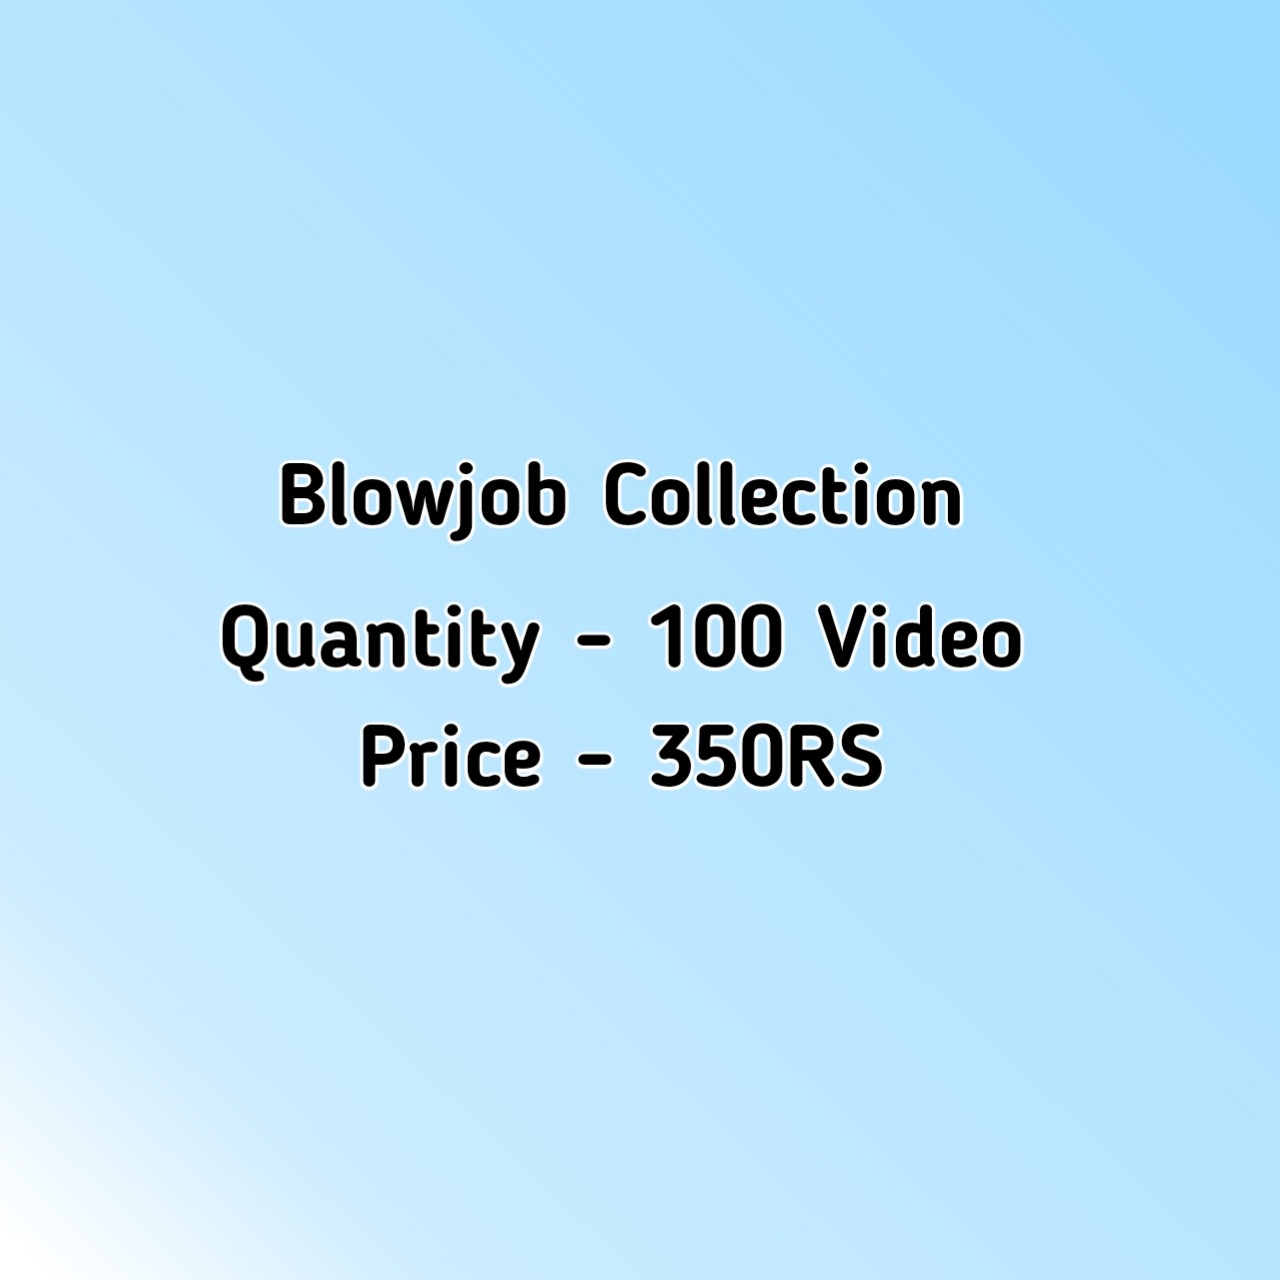 Blowjob Collection Telegraph